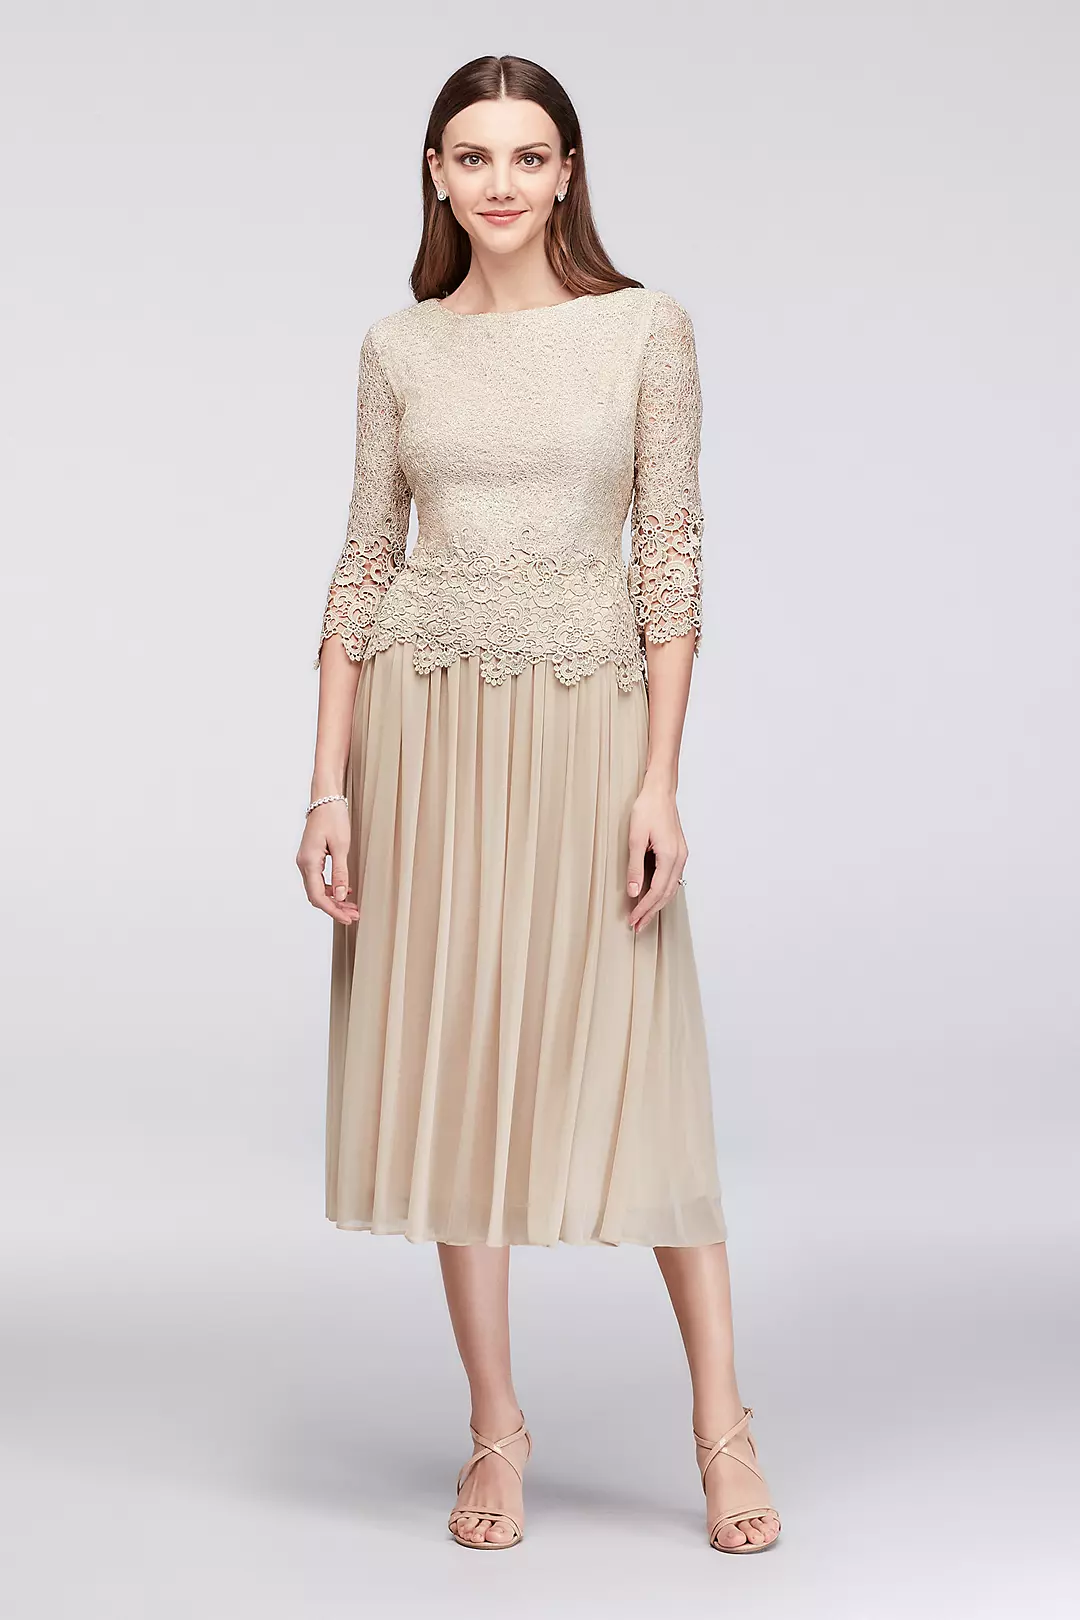 Webbed Lace and Mesh Tea-Length Dress Image